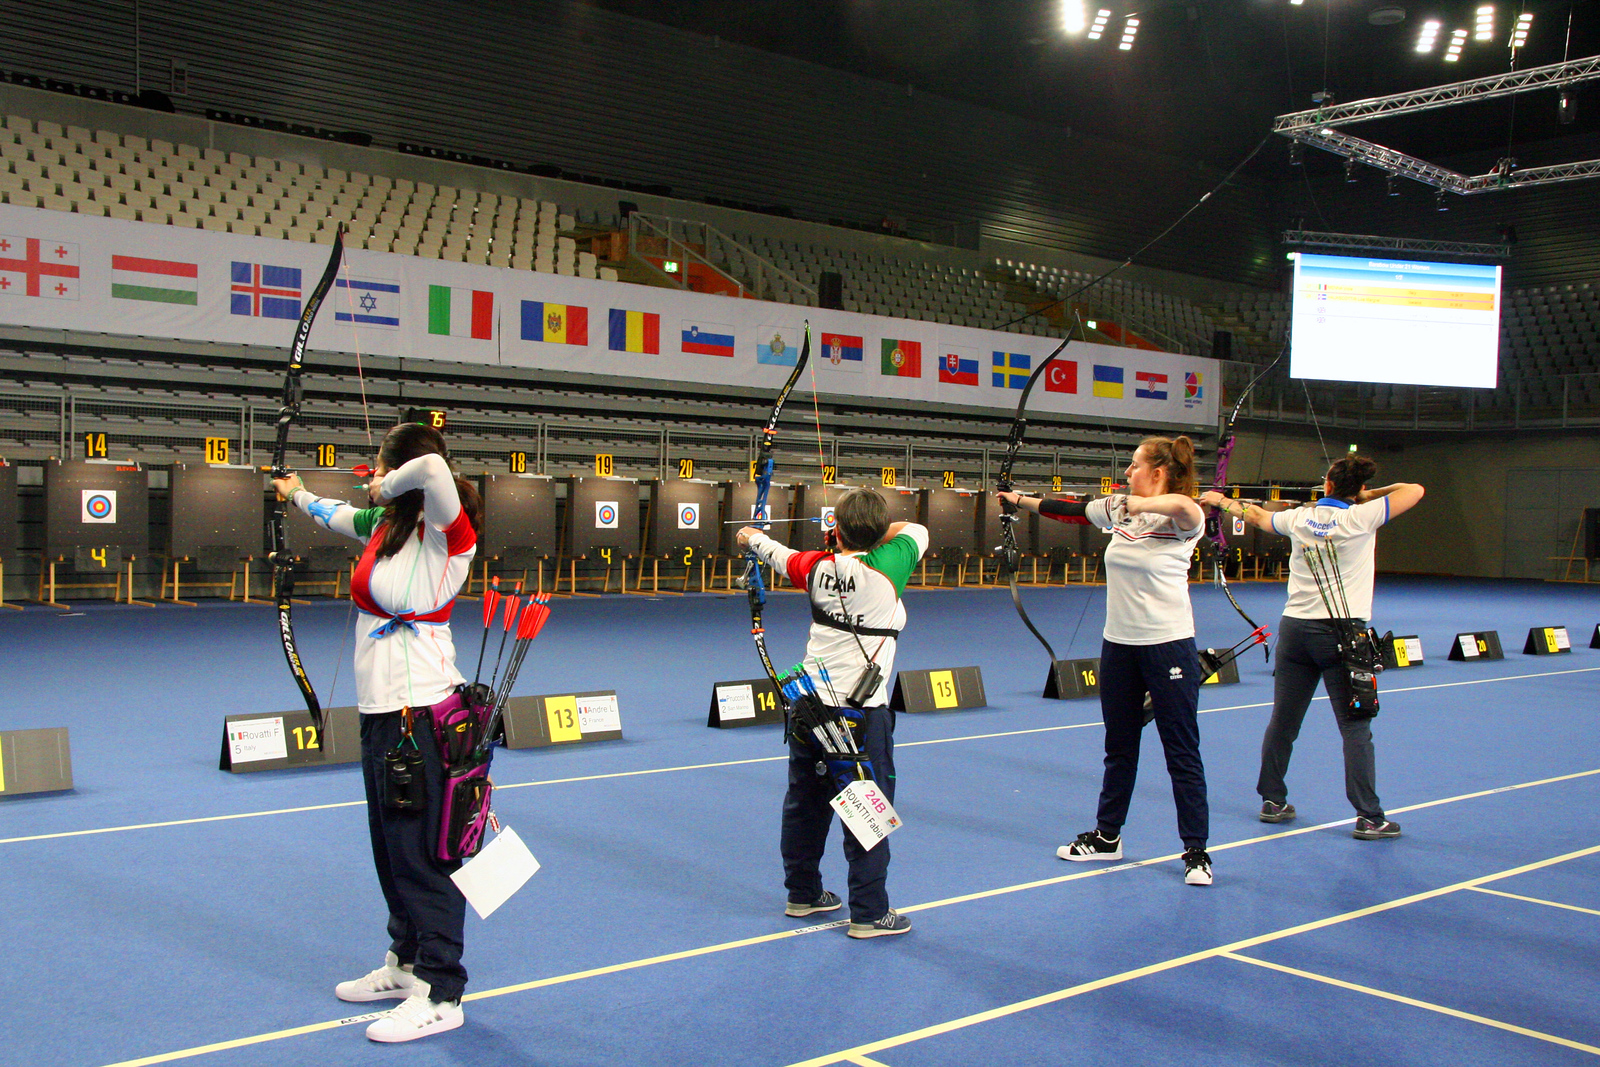 Europei Indoor: nove medaglie a squadre azzurre